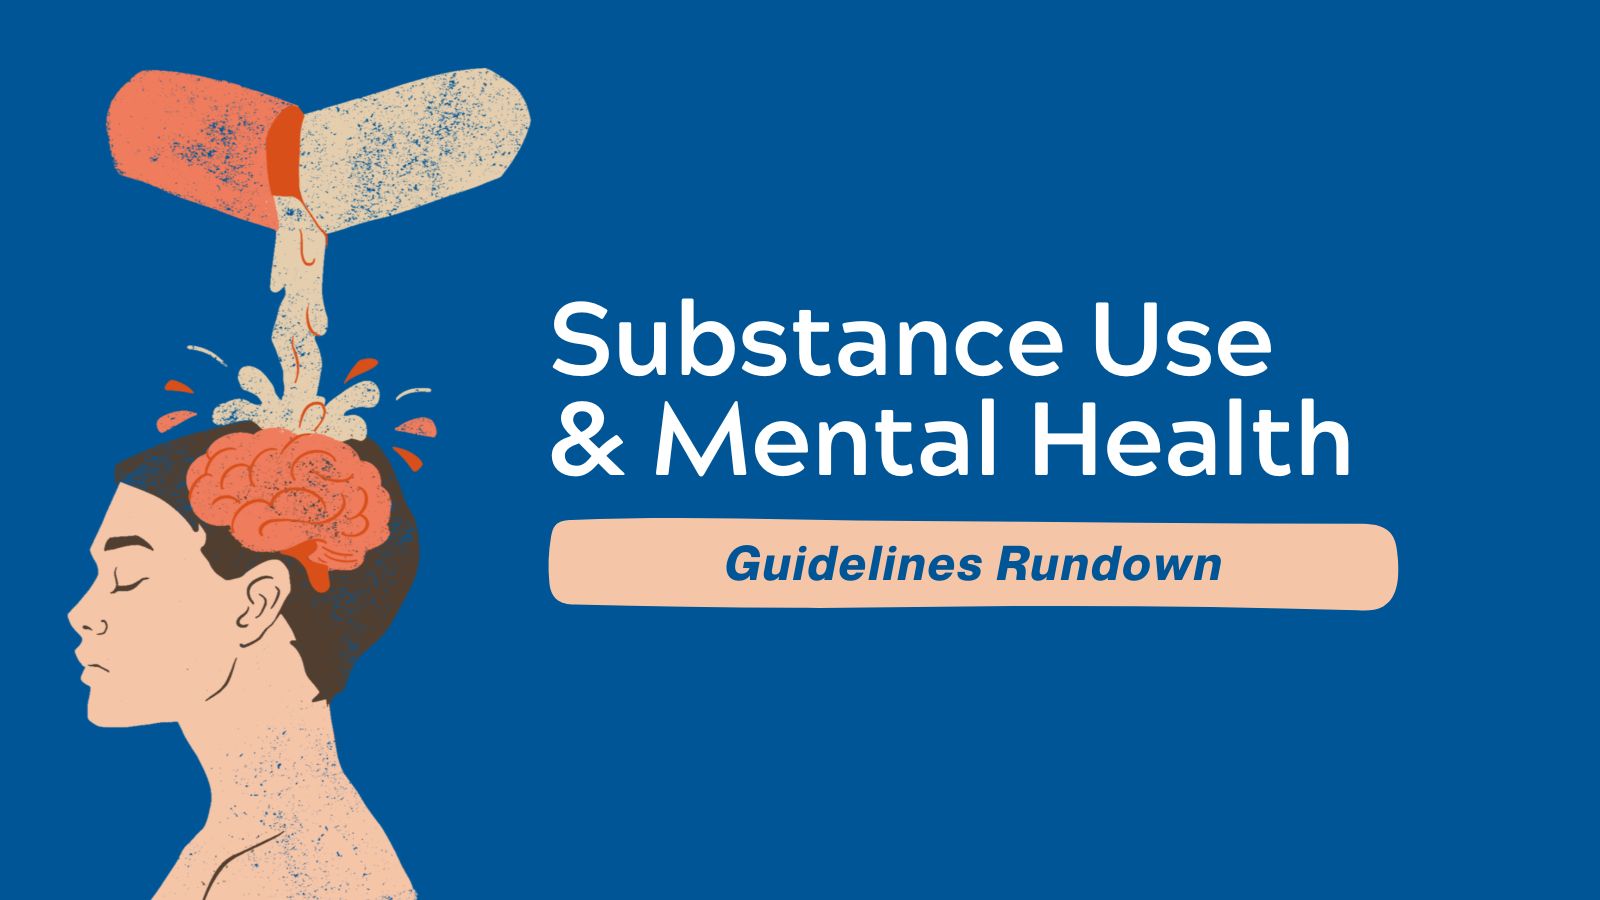 Guidelines Rundown - Substance Use & Mental Health